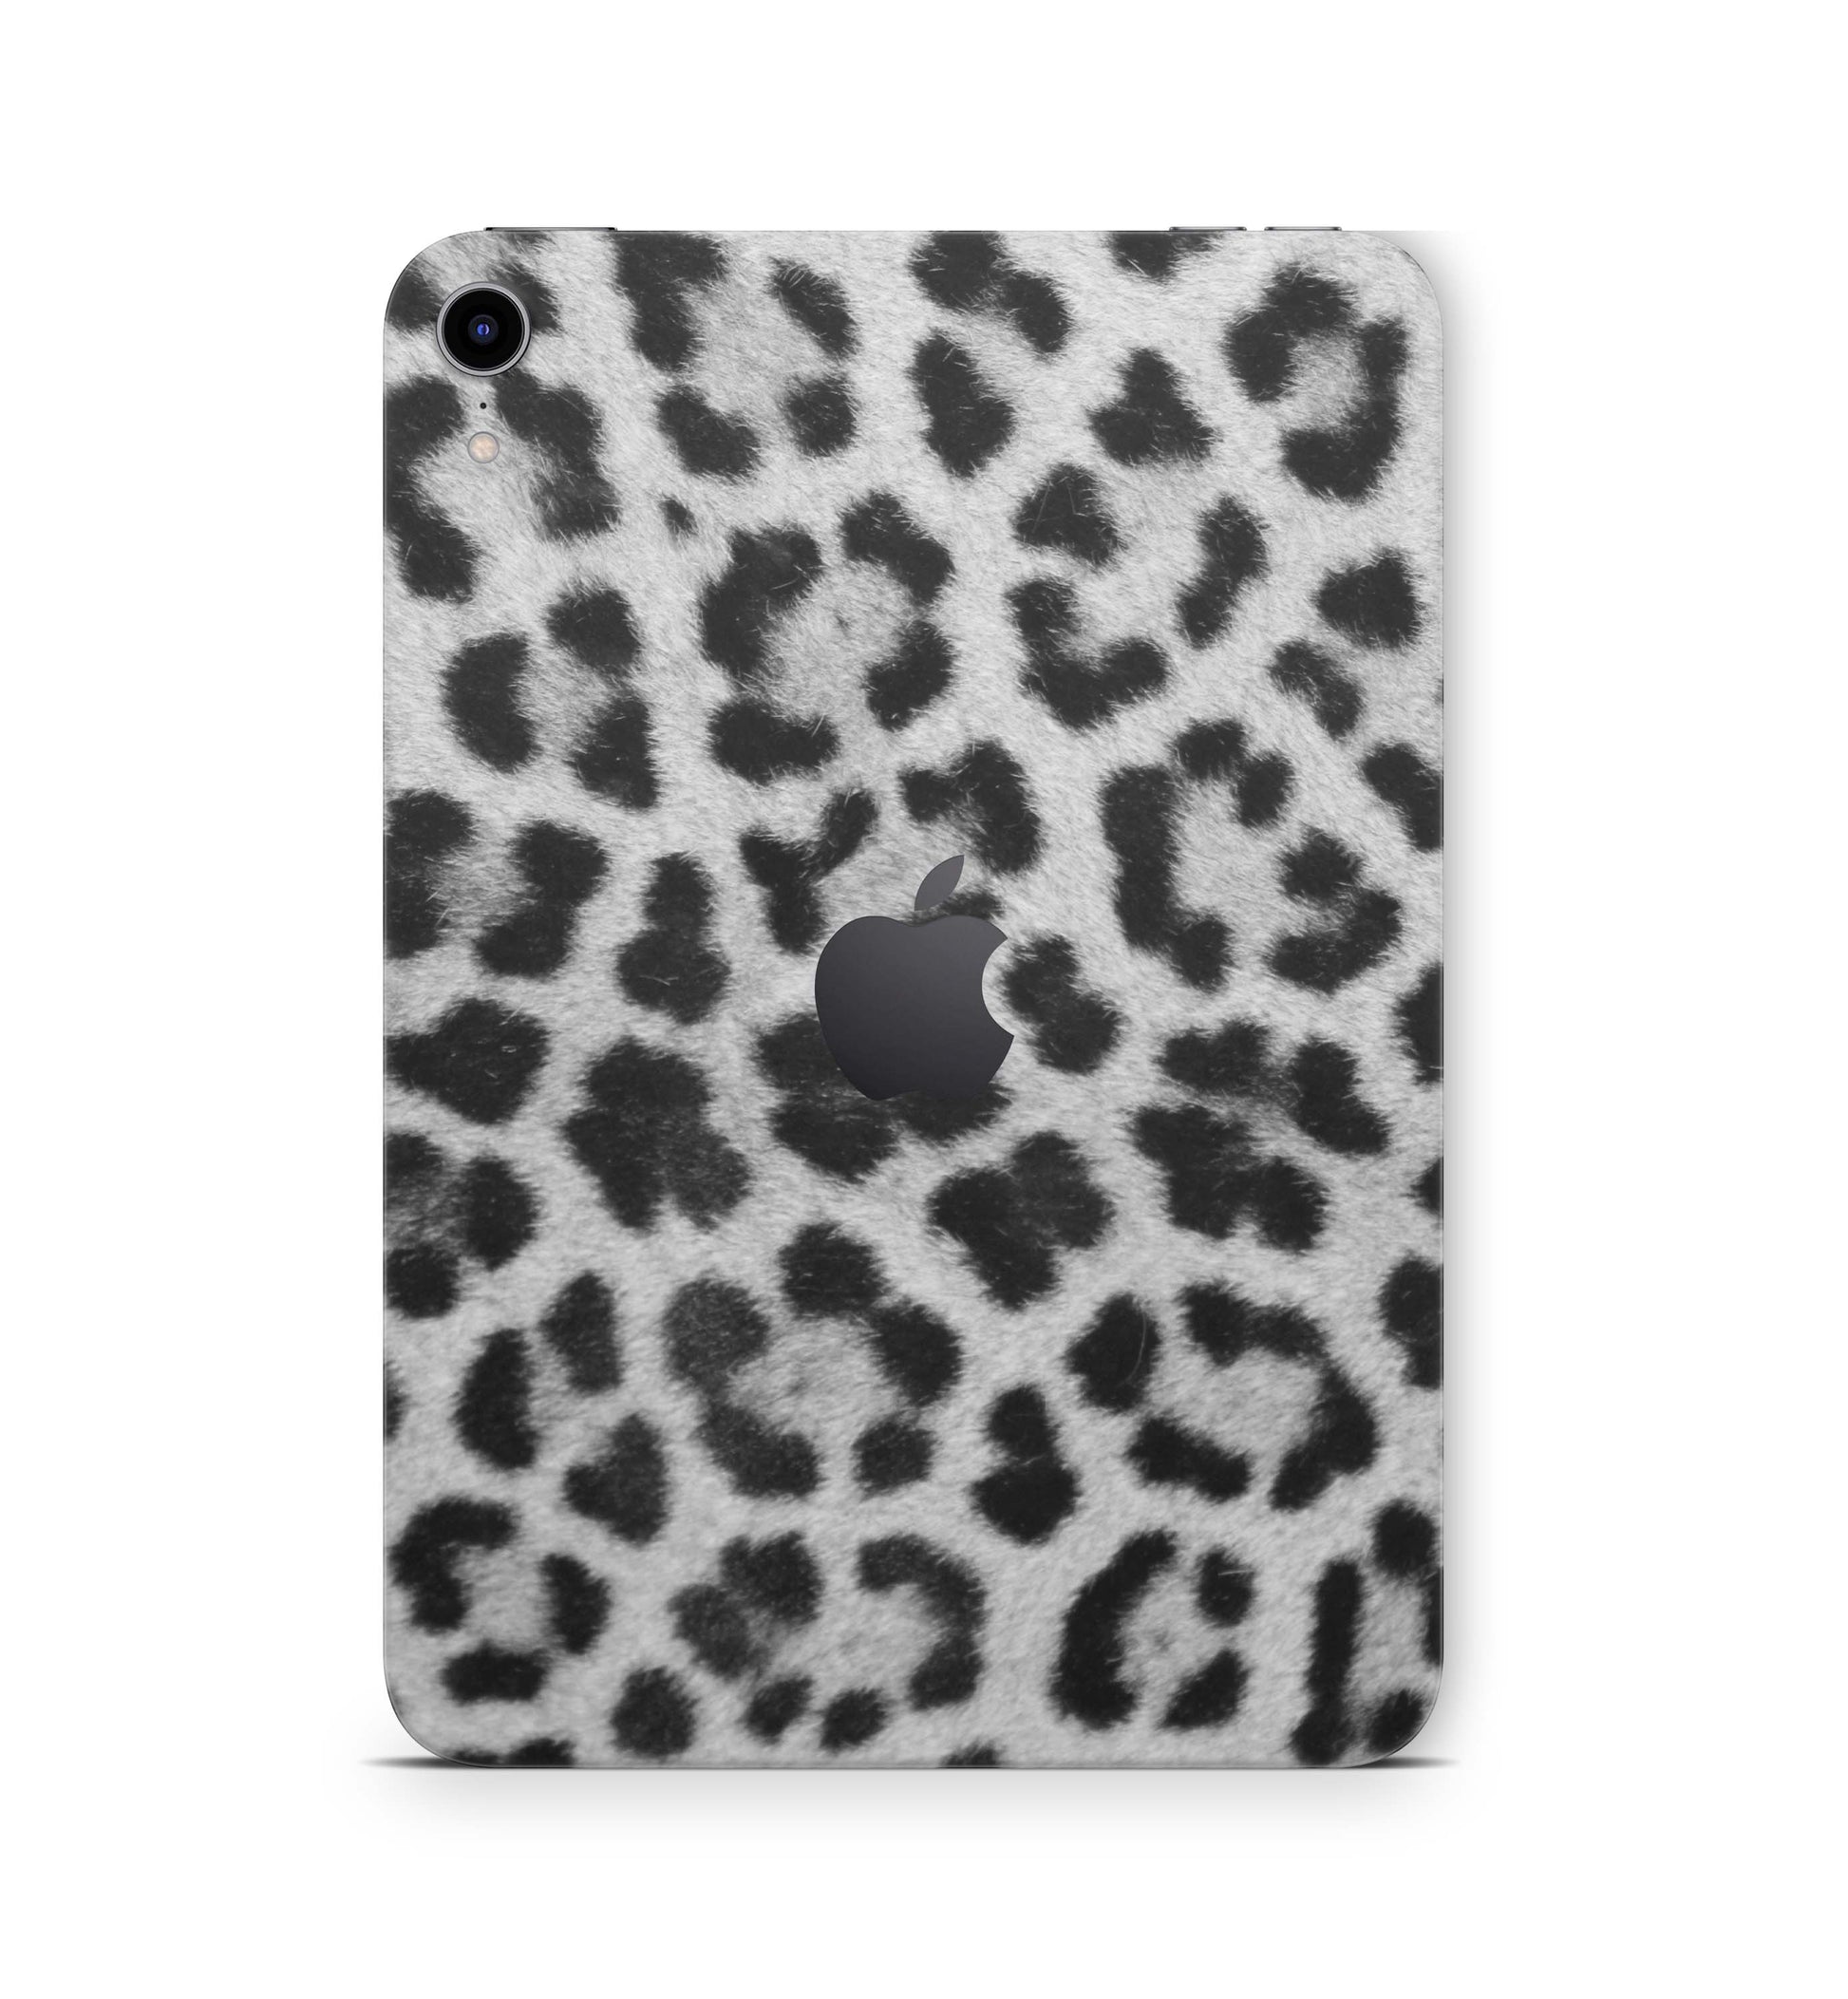 Apple iPad Skin Design Cover Folie Vinyl Skins & Wraps für alle iPad Modelle Aufkleber Skins4u Leopardenfell  